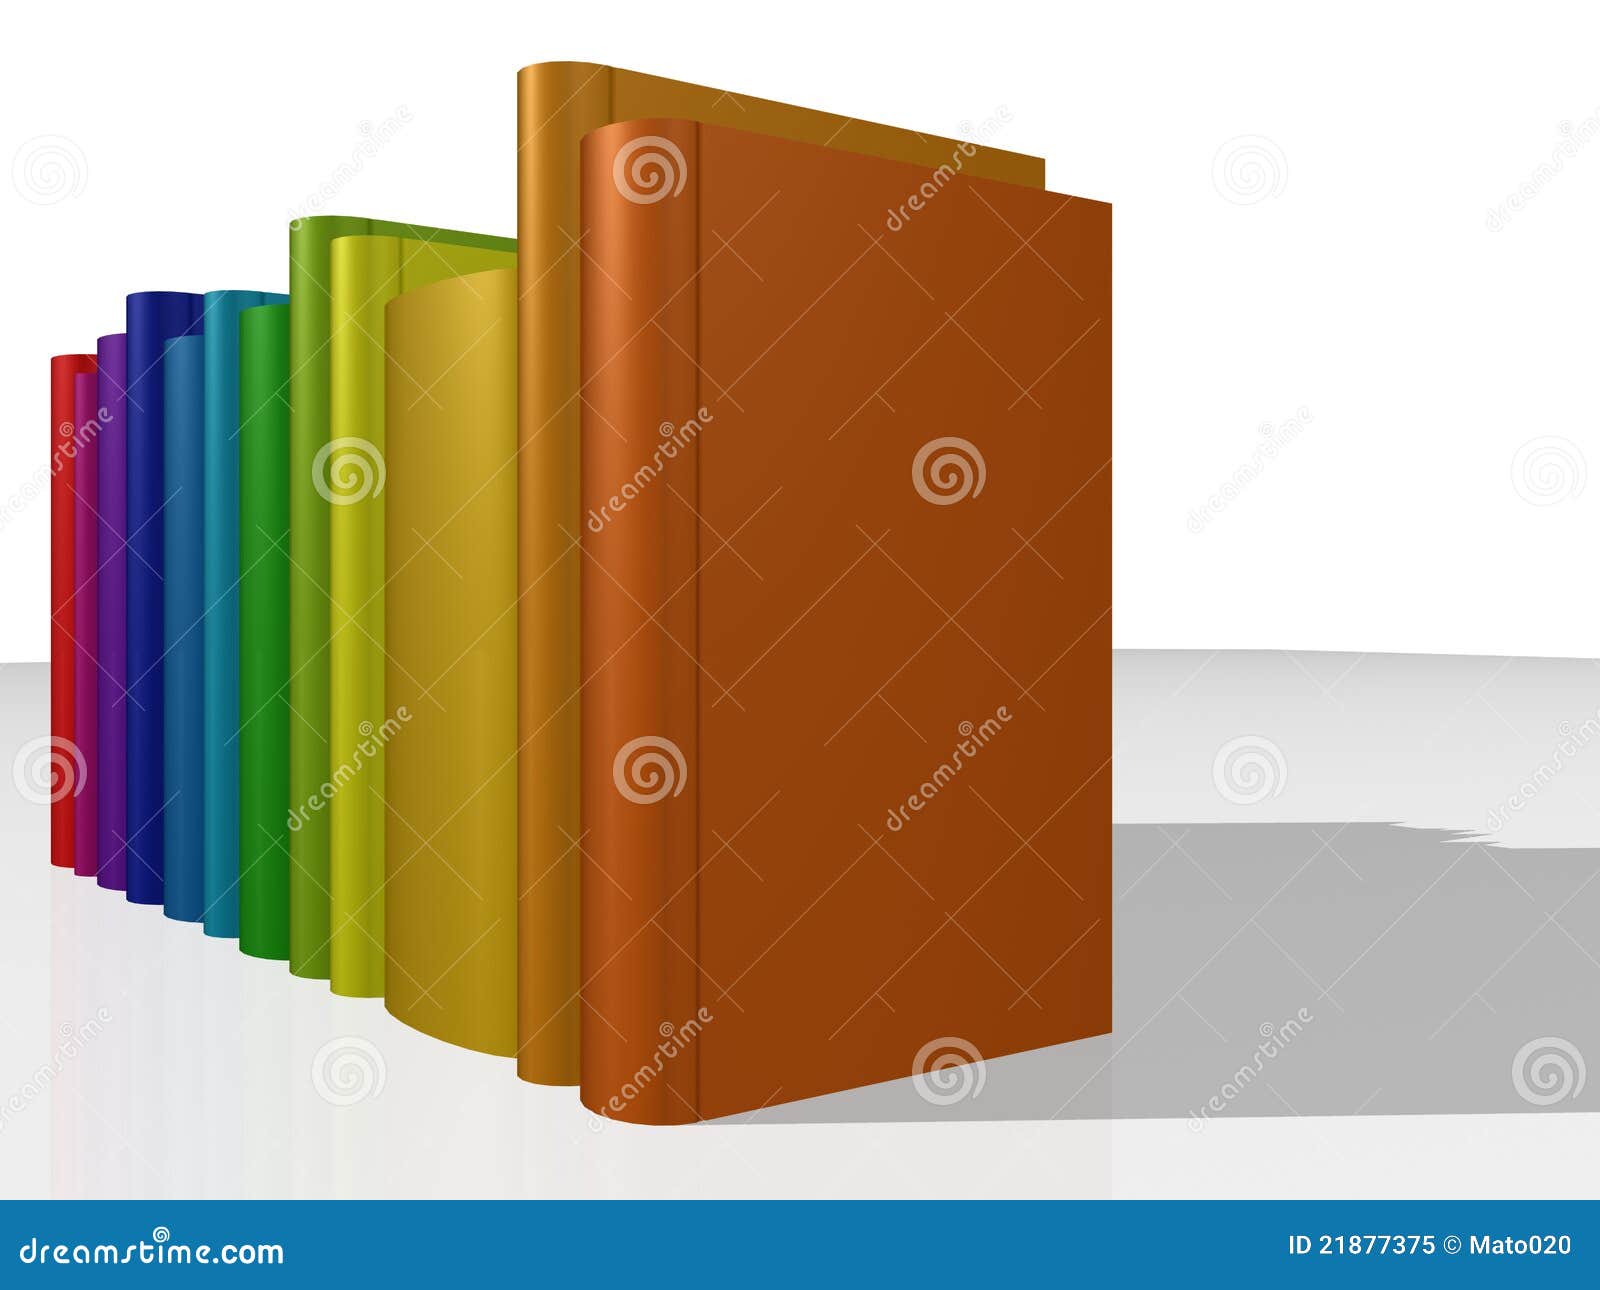 Colorful books II stock illustration. Illustration of blank - 21877375